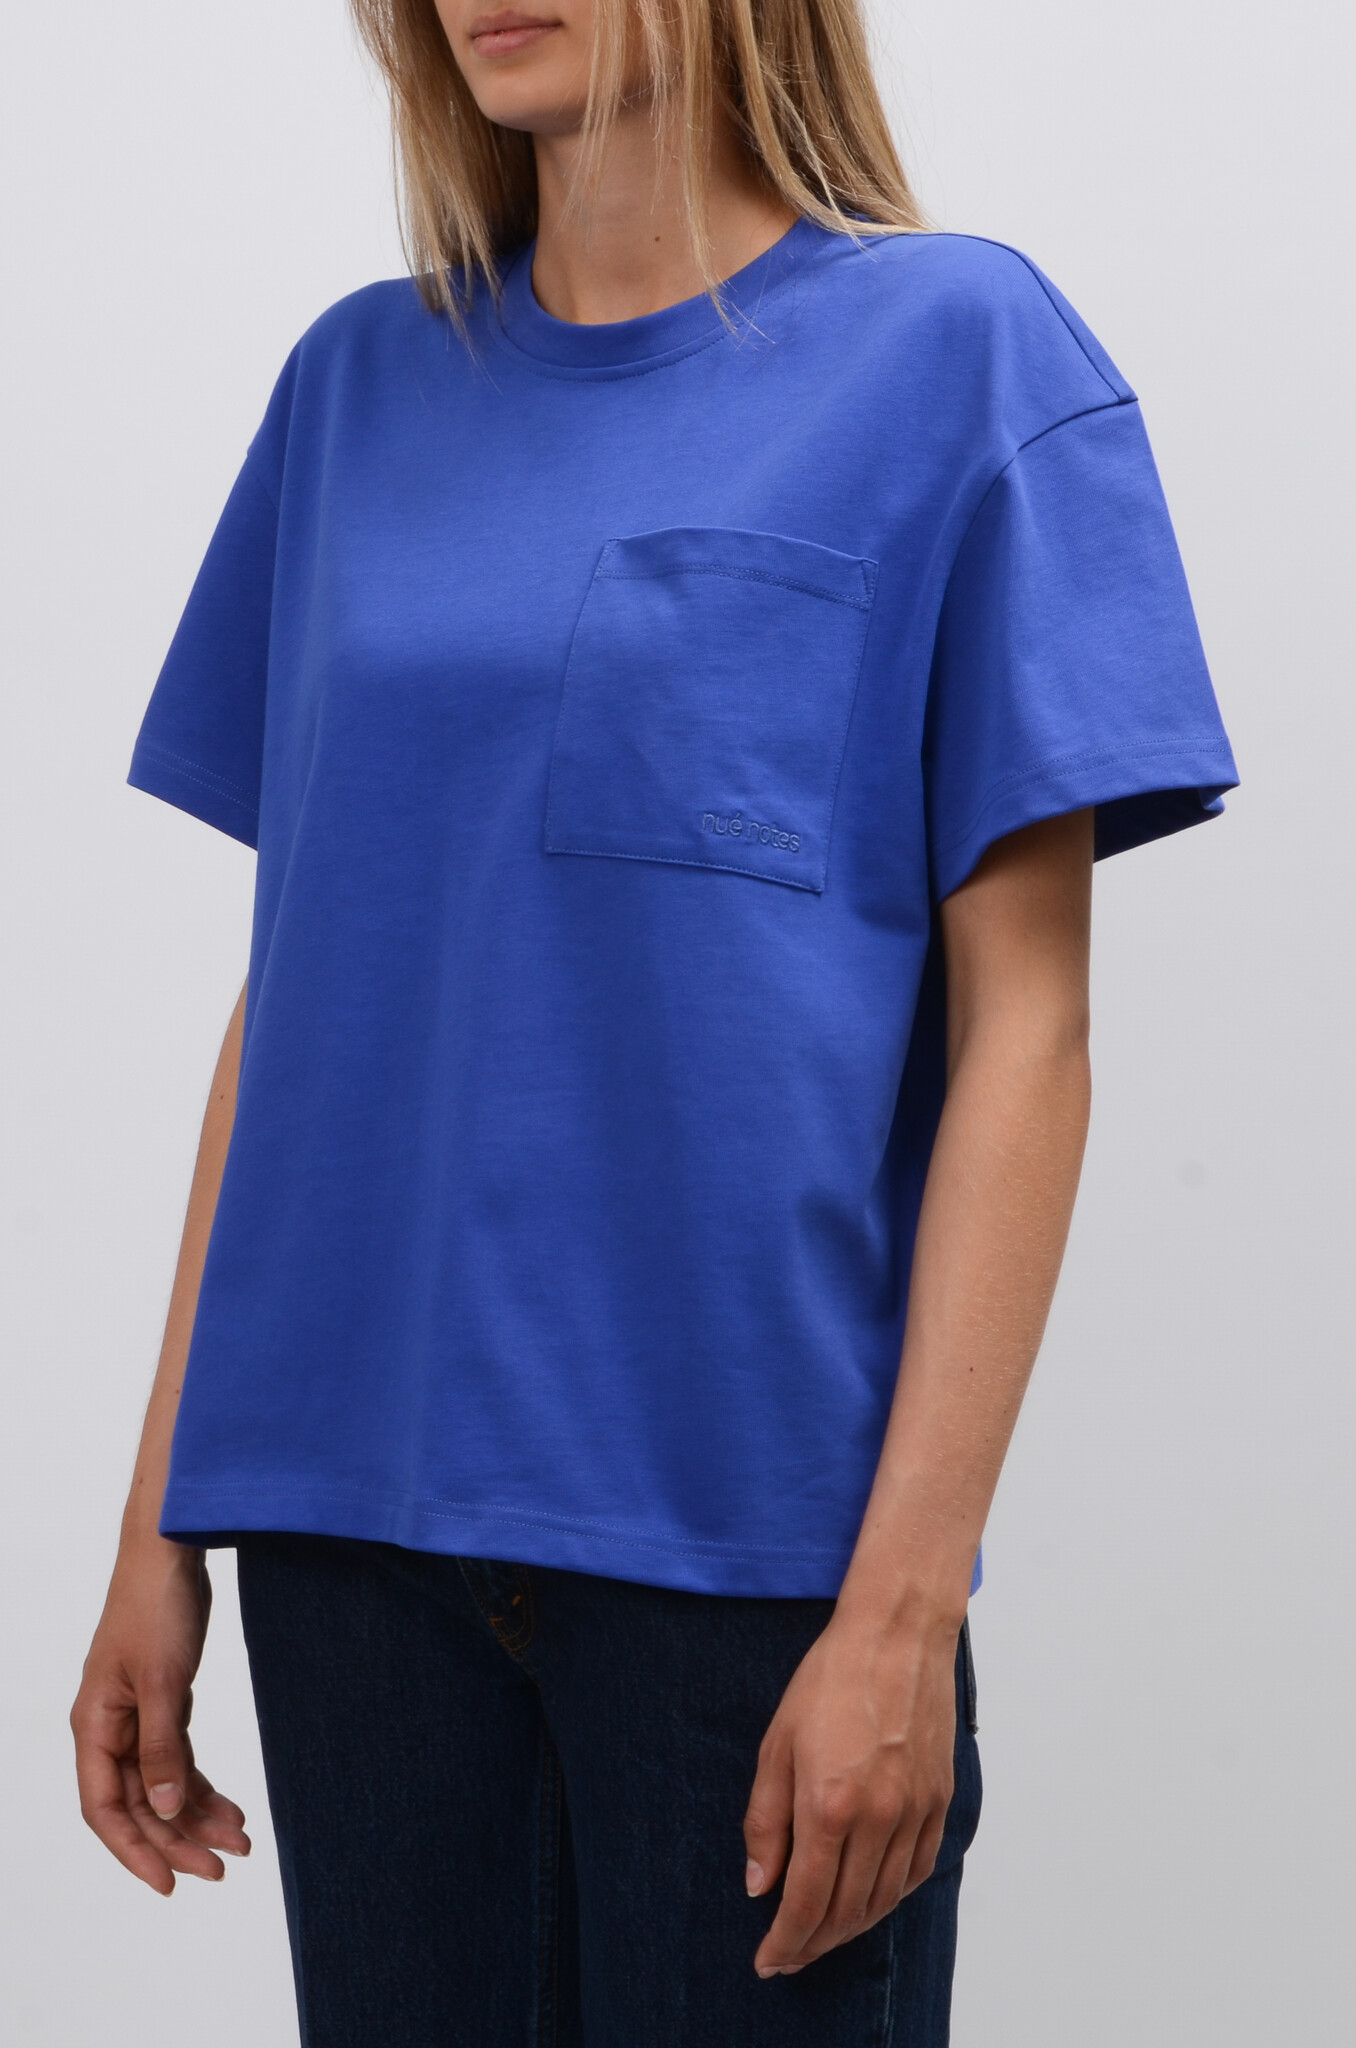 Mik T-Shirt in Blue-5